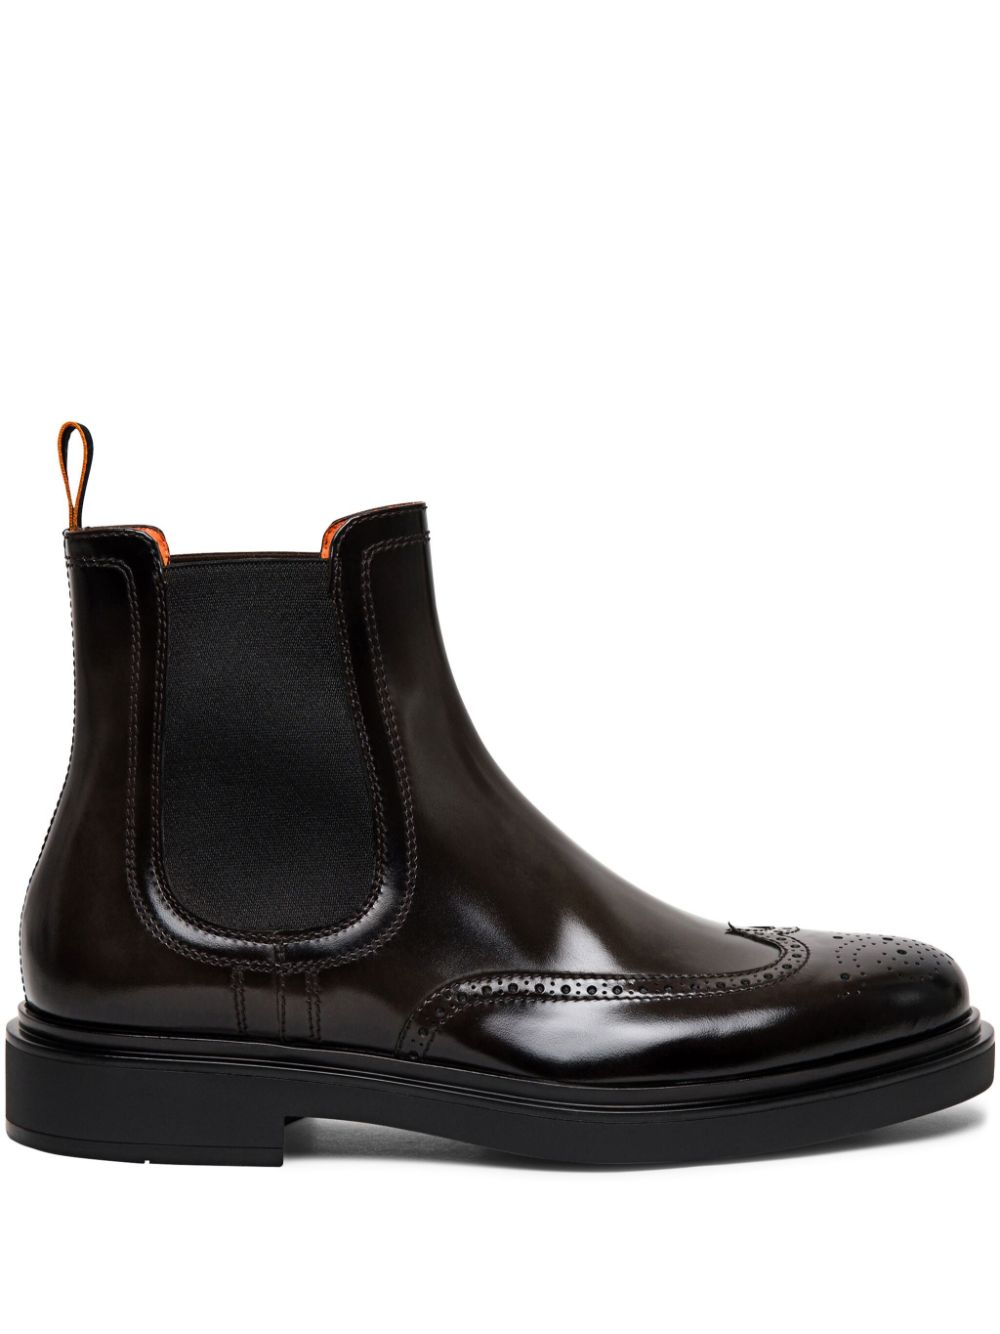 Santoni perforated leather Chelsea boots - Brown von Santoni